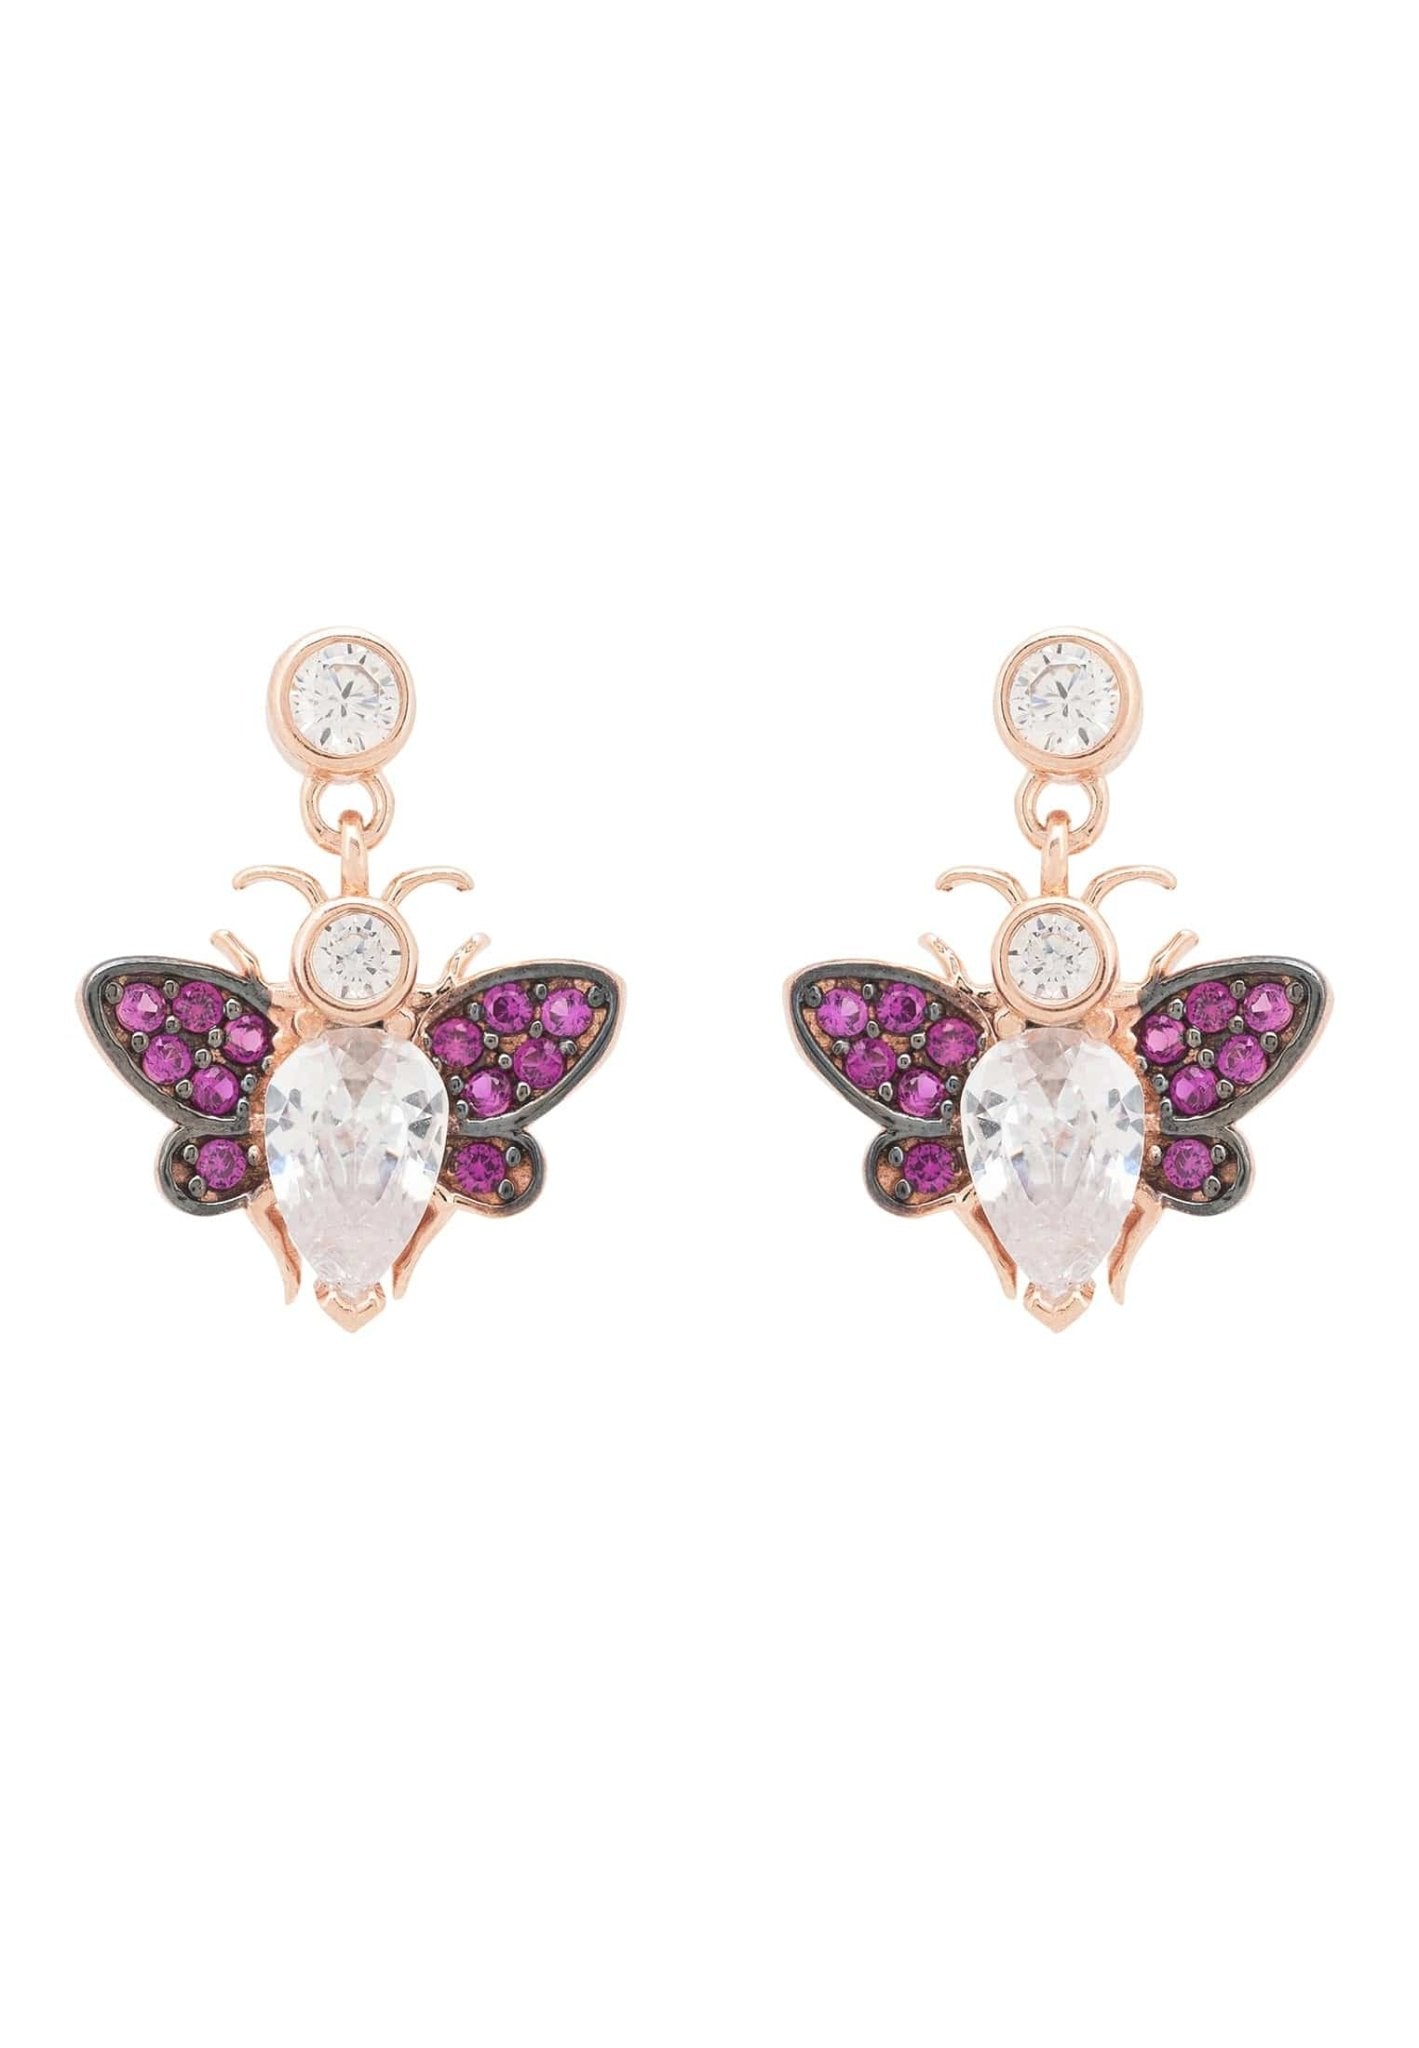 Bumble Bee Earrings Rosegold - LATELITA Earrings